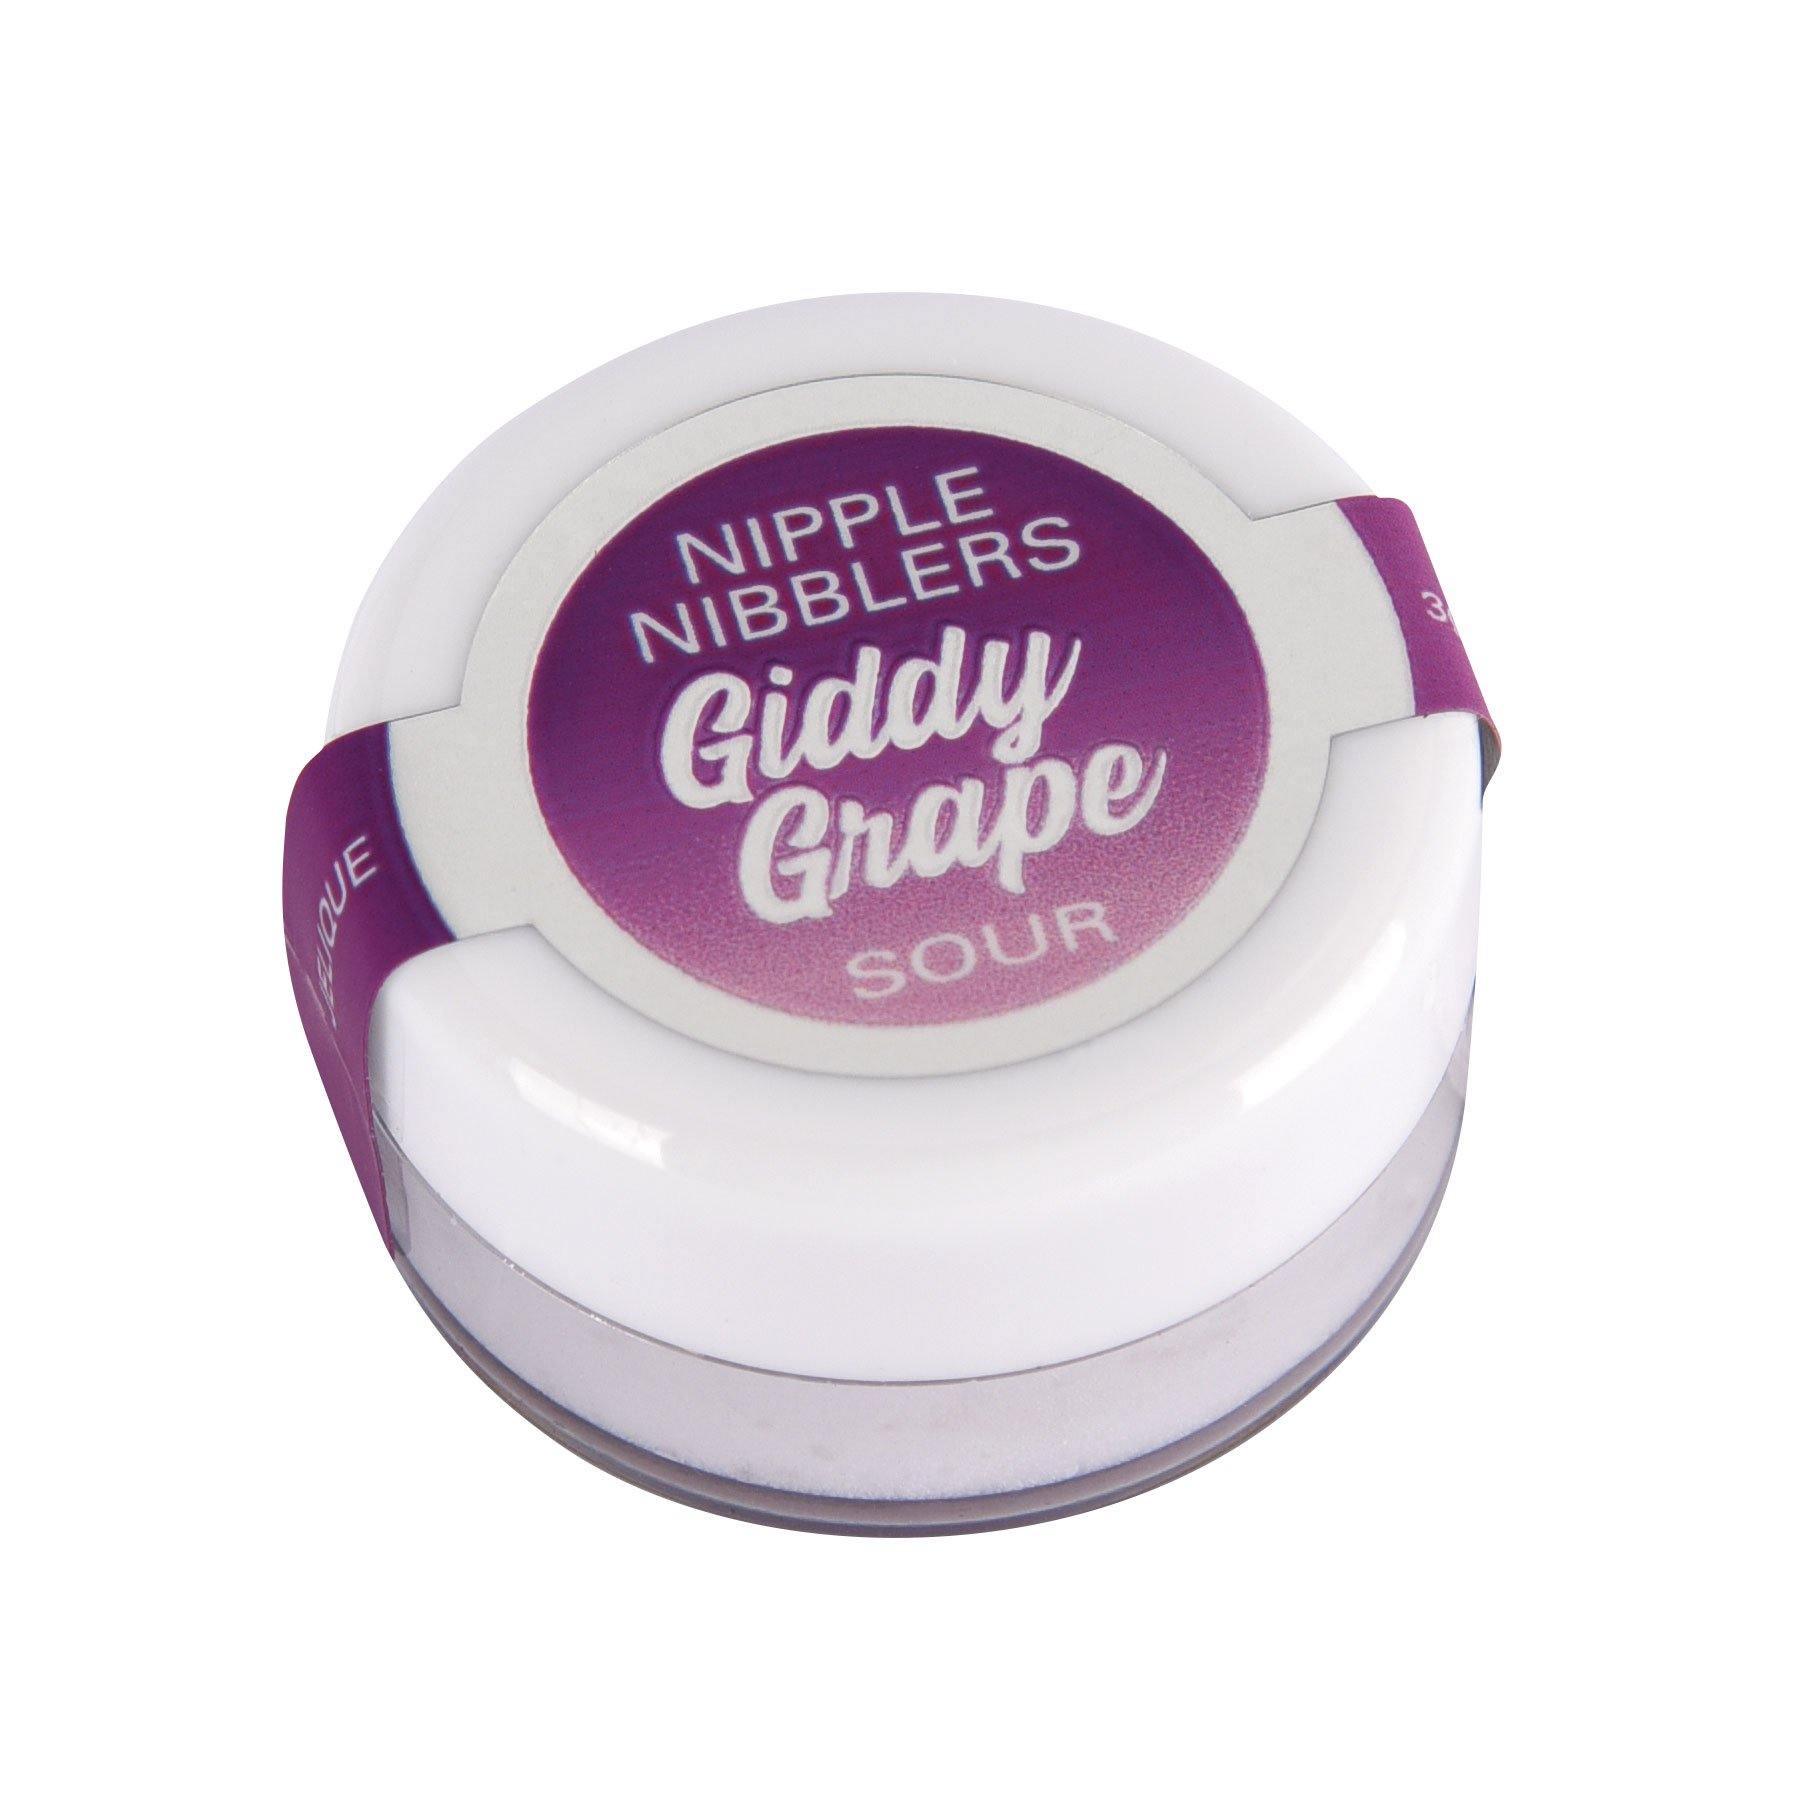 Nipple Nibbler Sour Pleasure Balm Giddy Grape - 3g Jar - My Sex Toy Hub